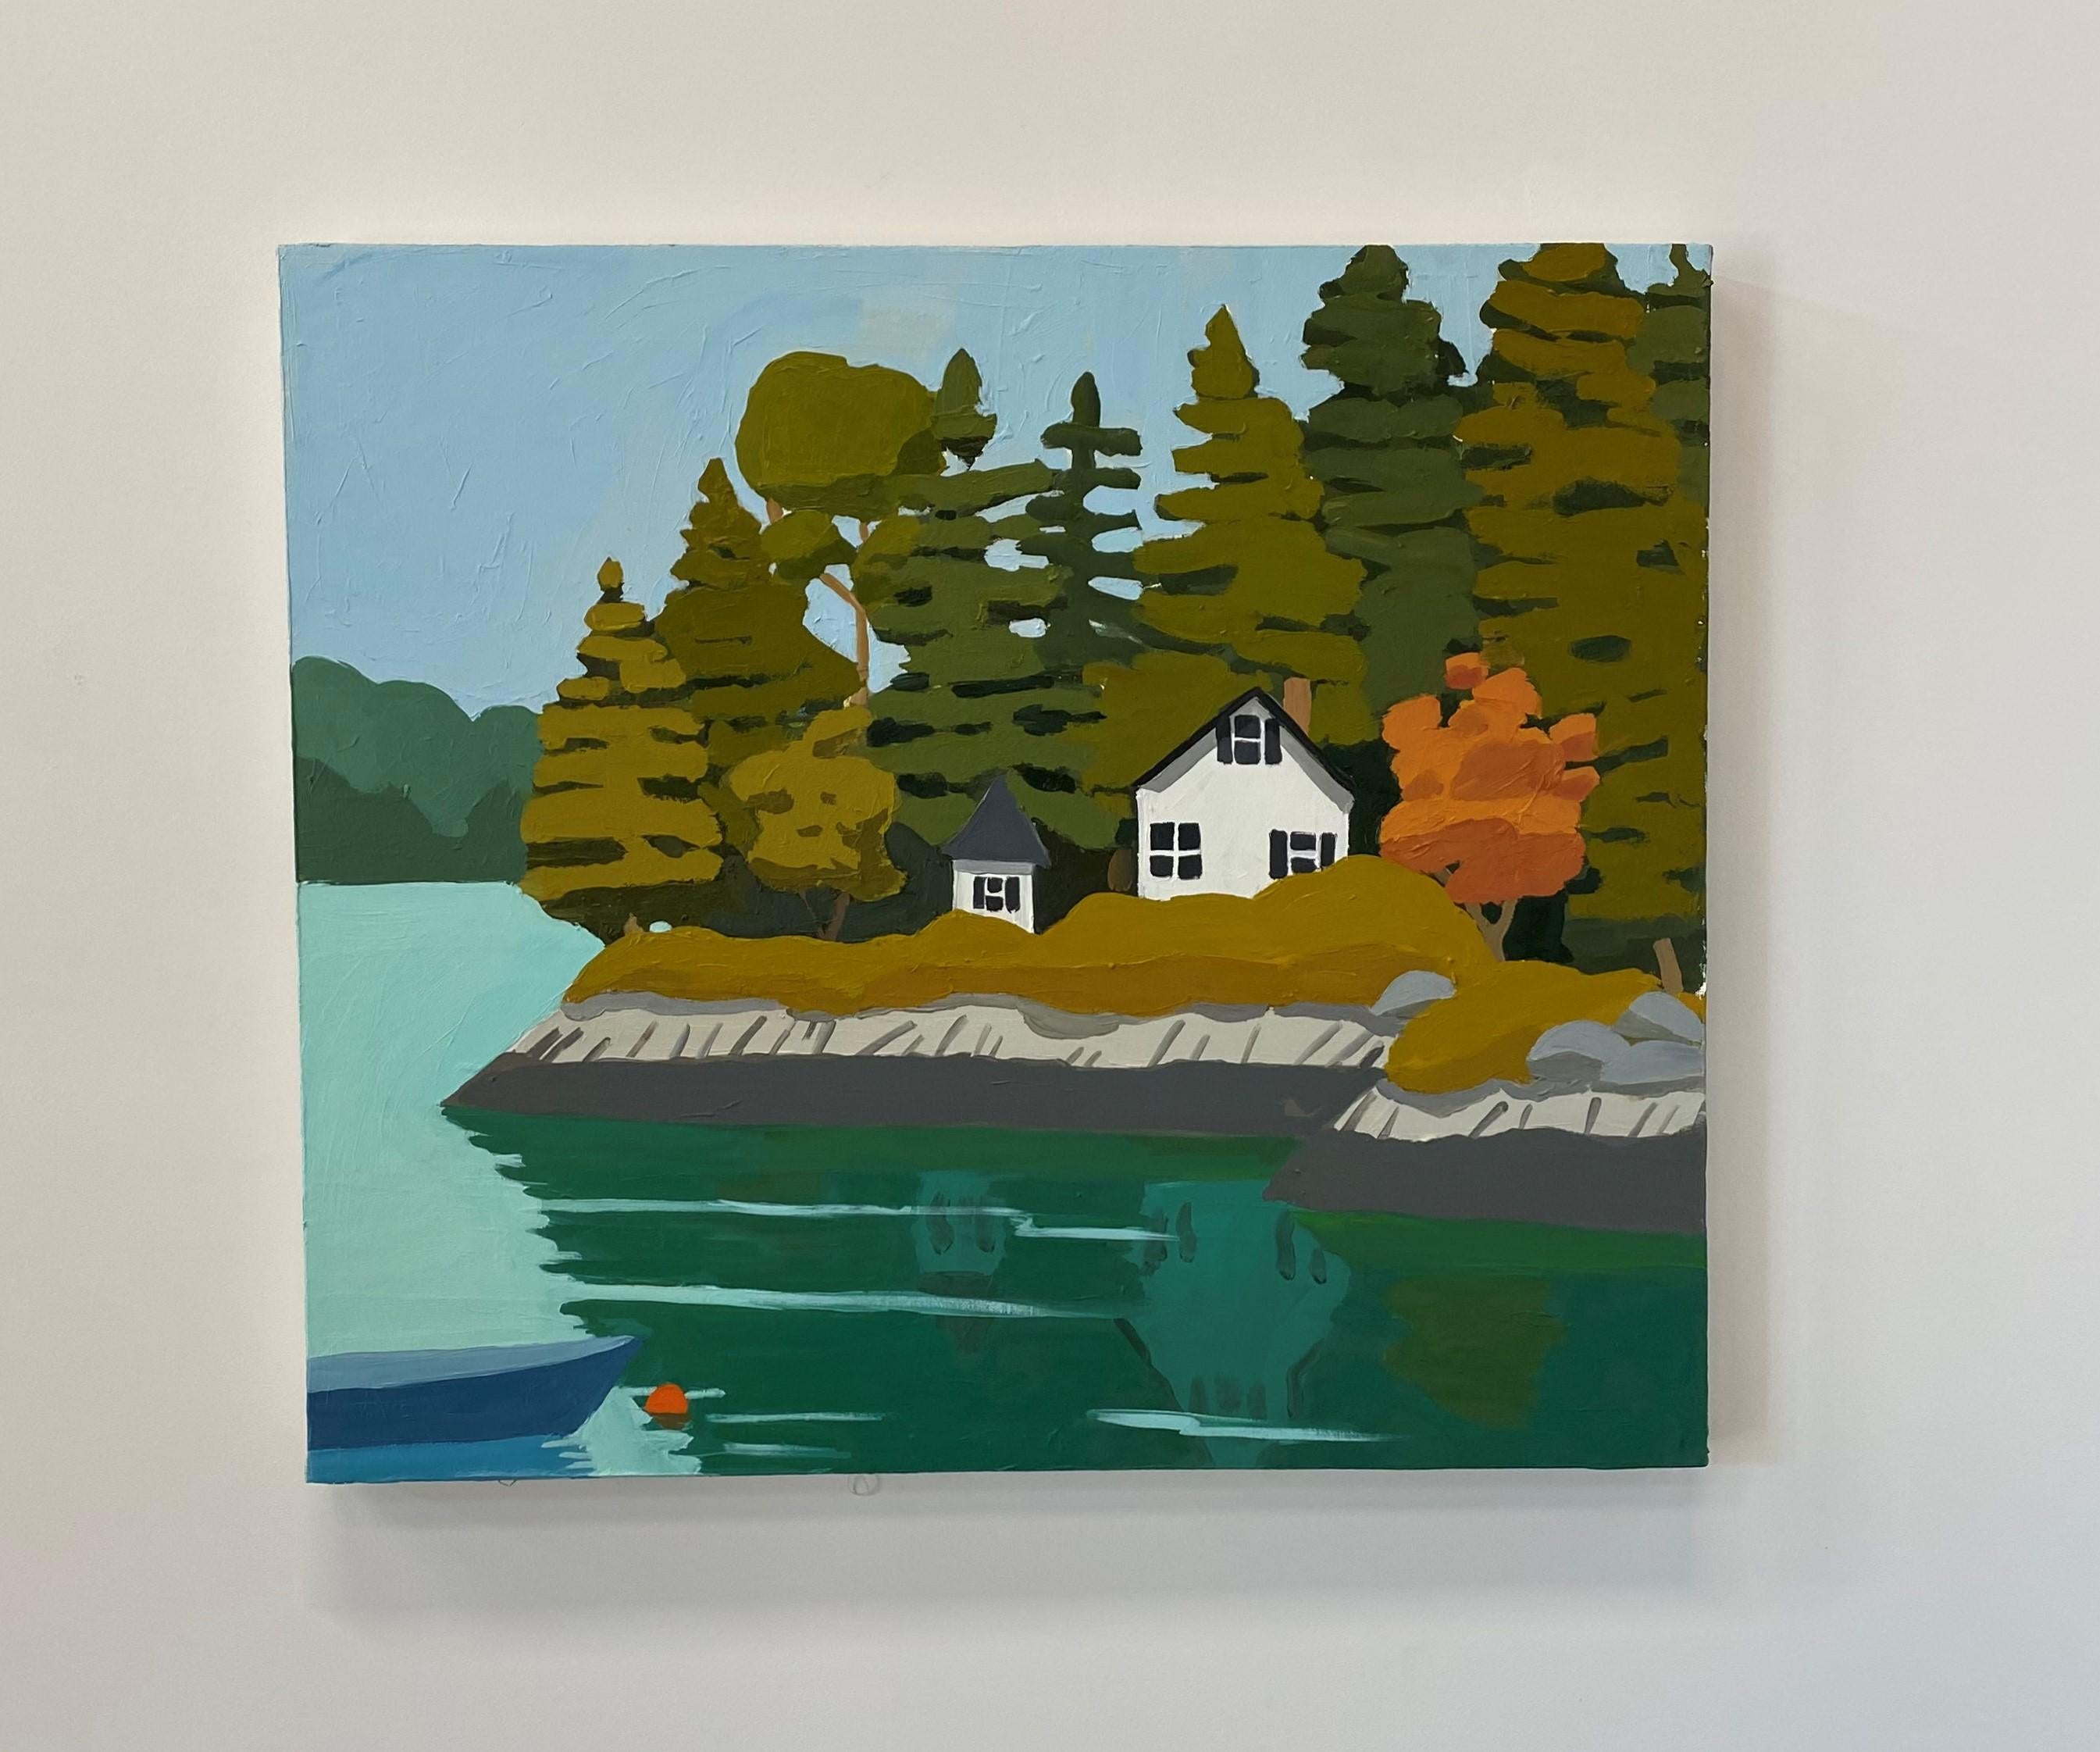 Sheep Island, Maine Landscape, Blue Water, Green Trees, White House on Shoreline 3